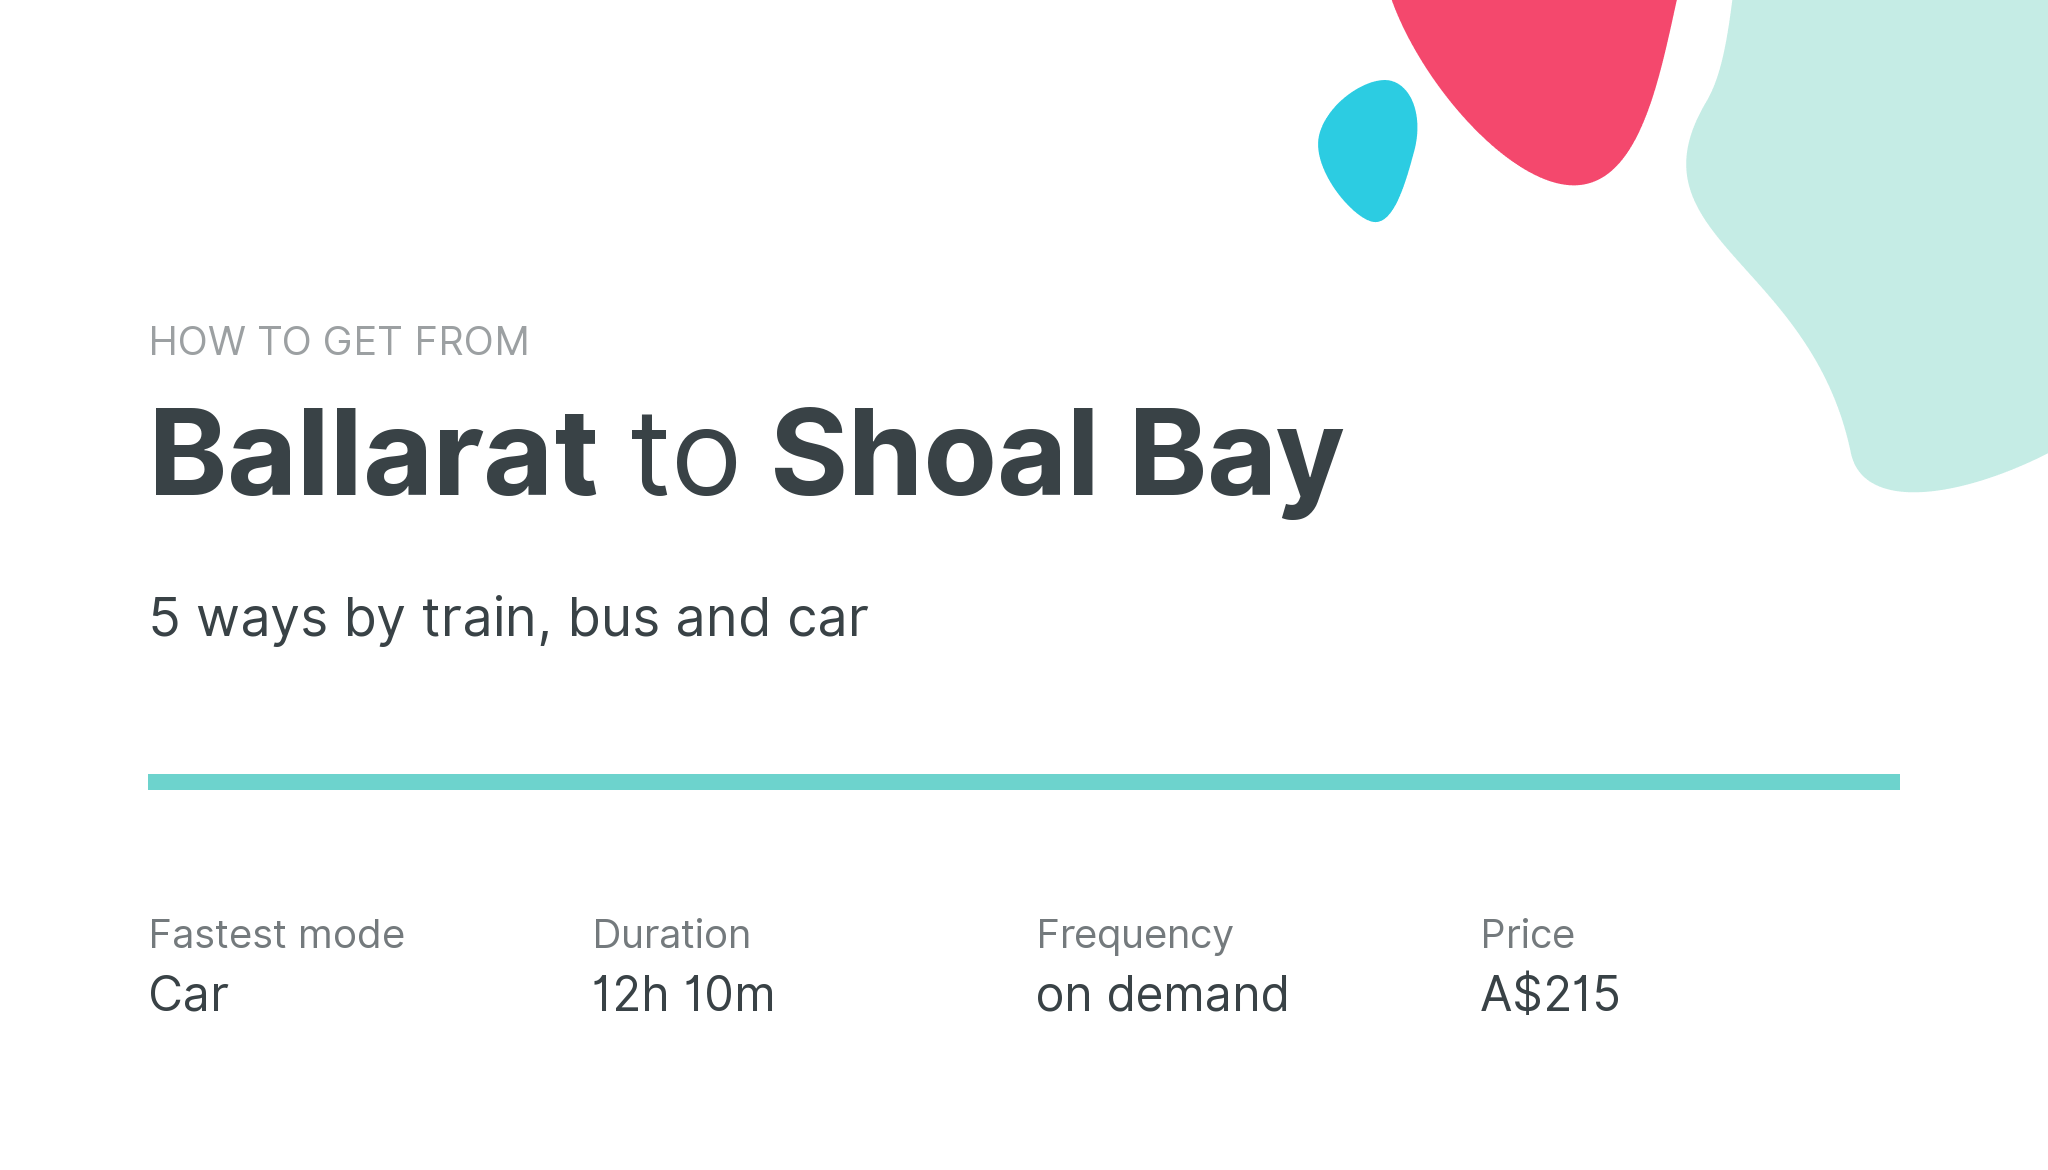 How do I get from Ballarat to Shoal Bay